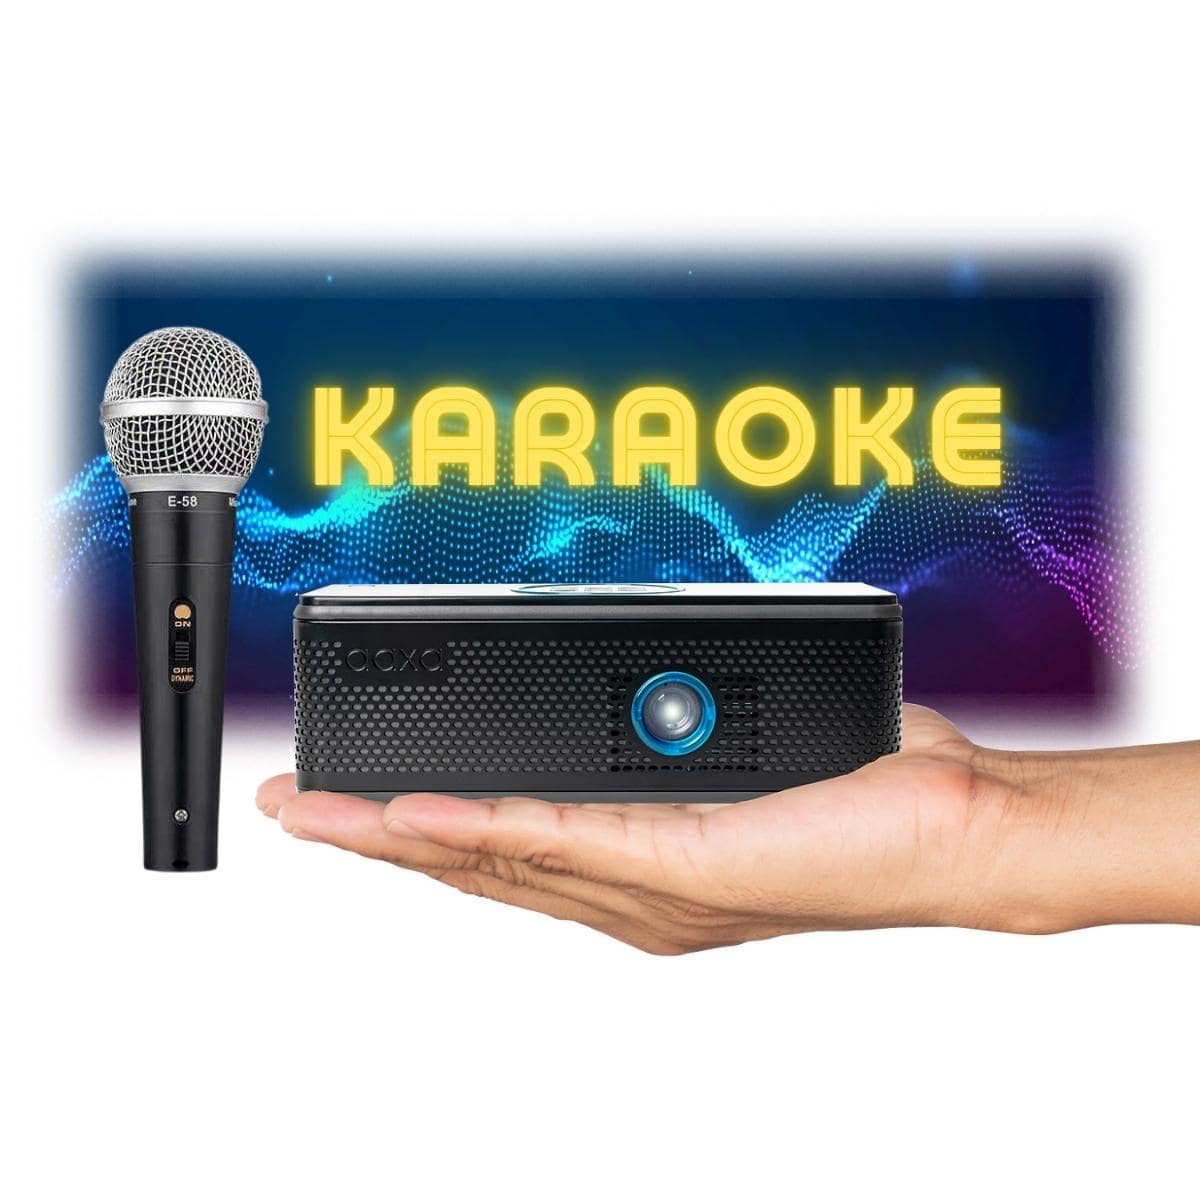 BP1K Karaoke Pico Projector